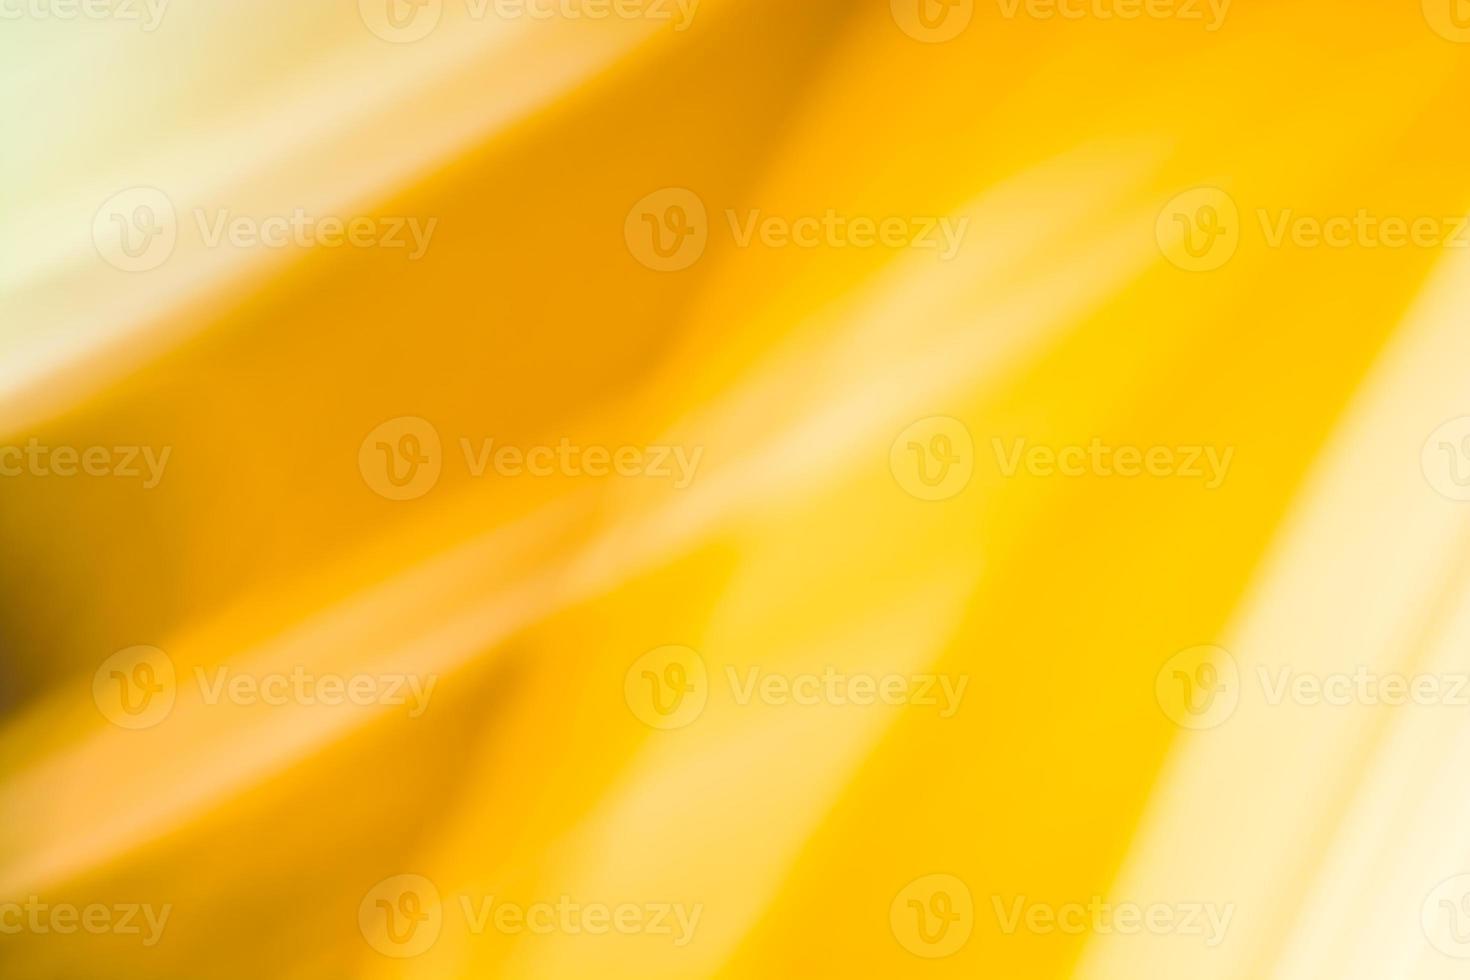 Bright yellow orange abstract background photo